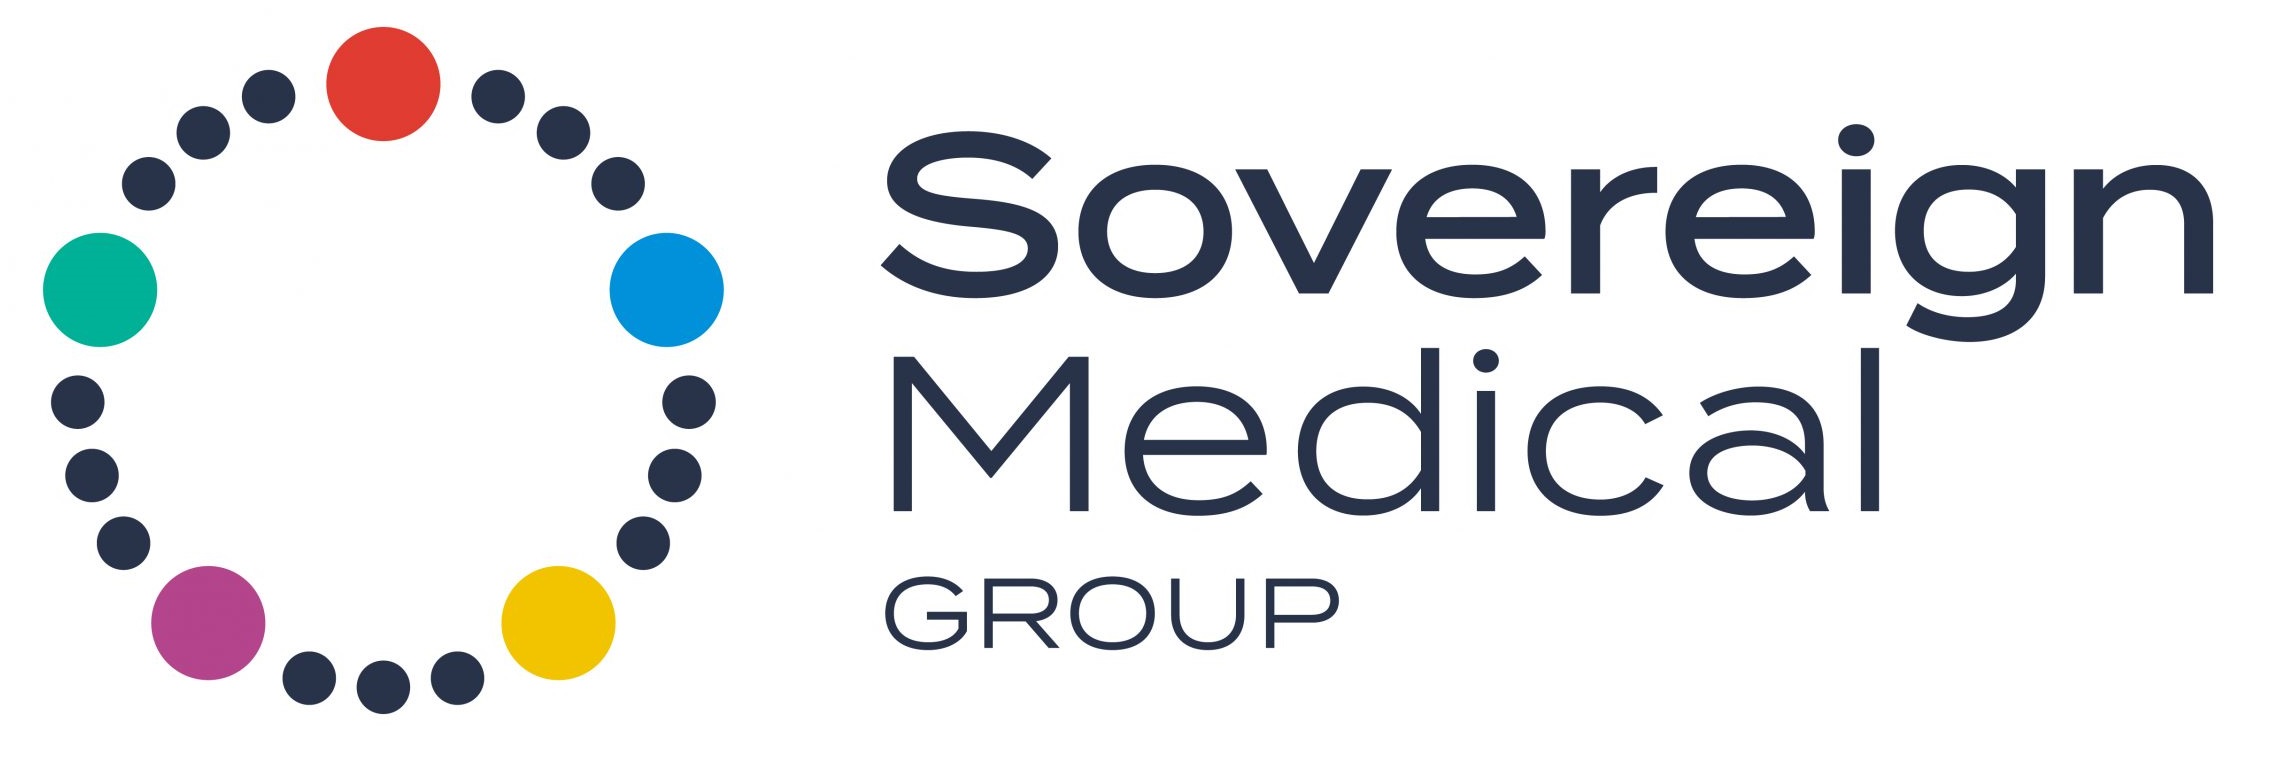 Sovereign Medical